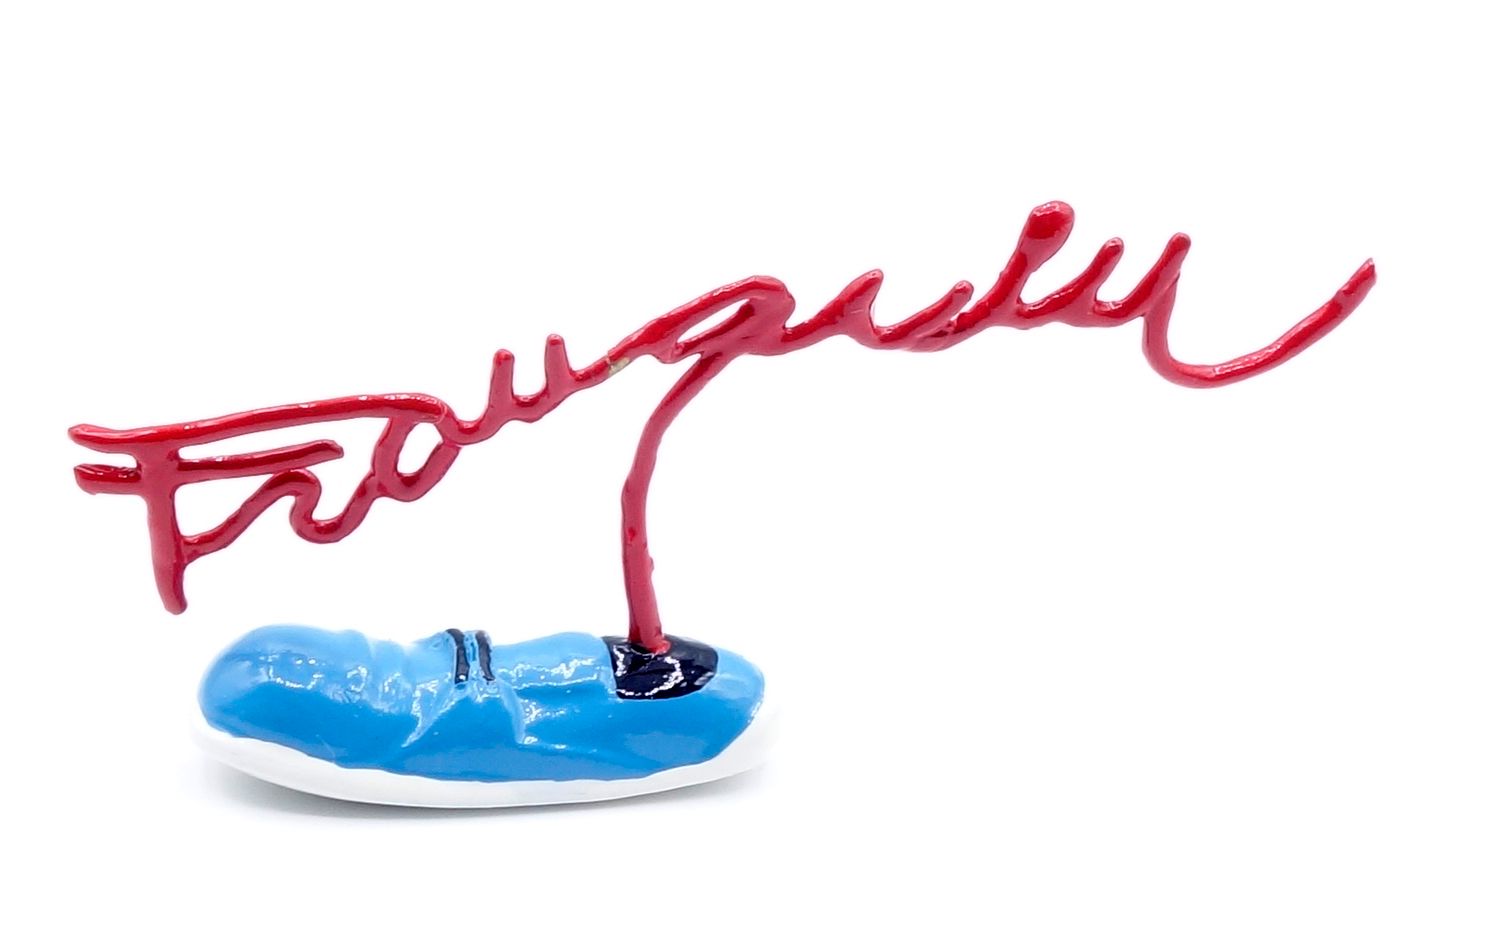 André FRANQUIN 
PIXI : Signatures Franquin, chaussure (3768), 2006, 300 ex., BC